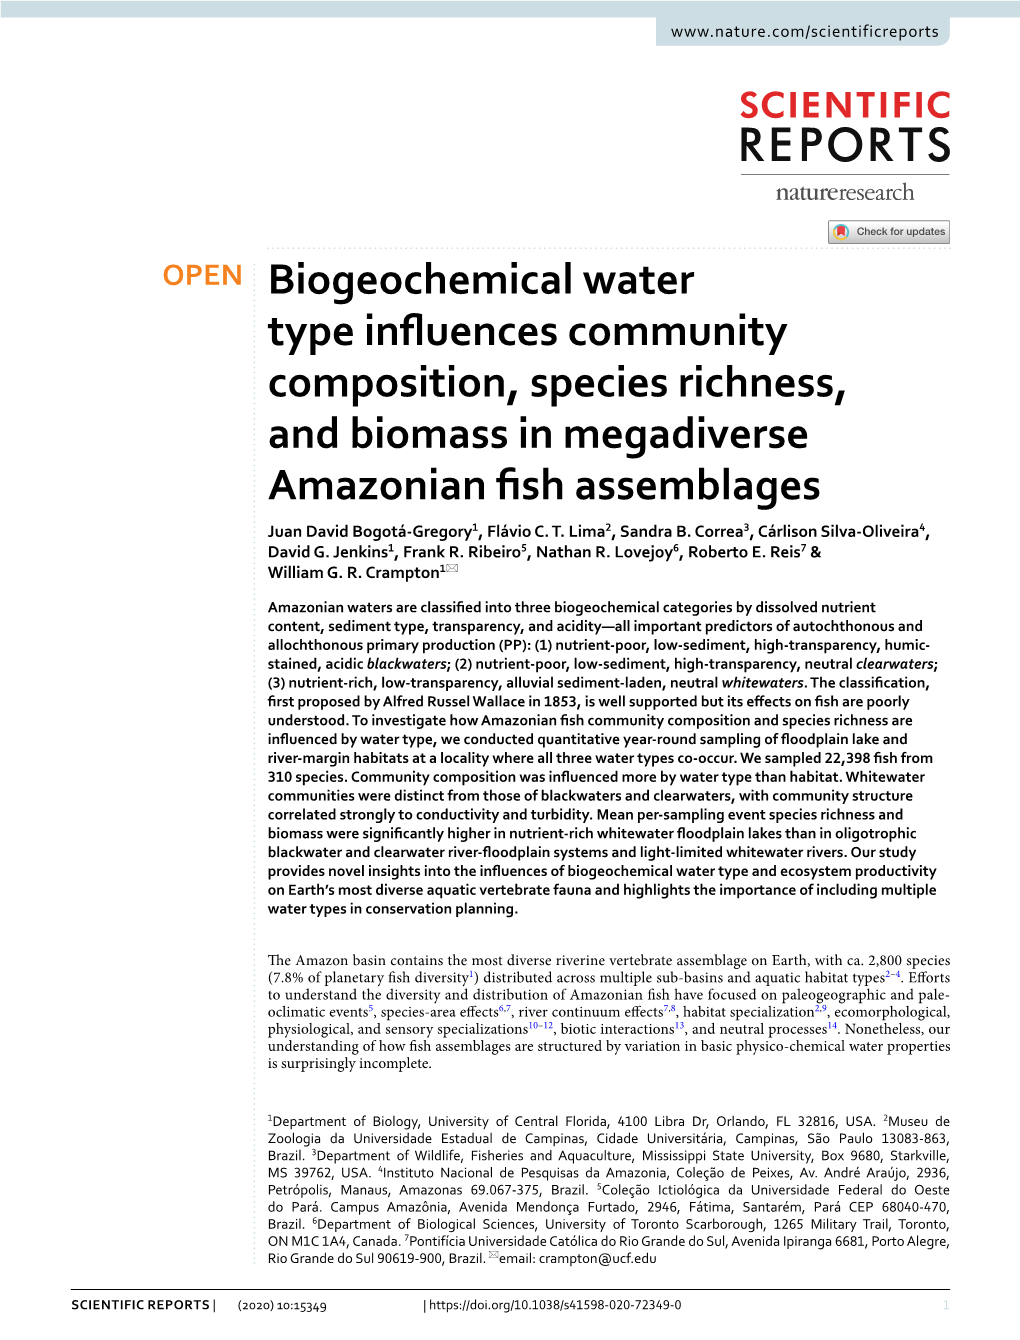 Biogeochemical Water Type Influences Community Composition, Species